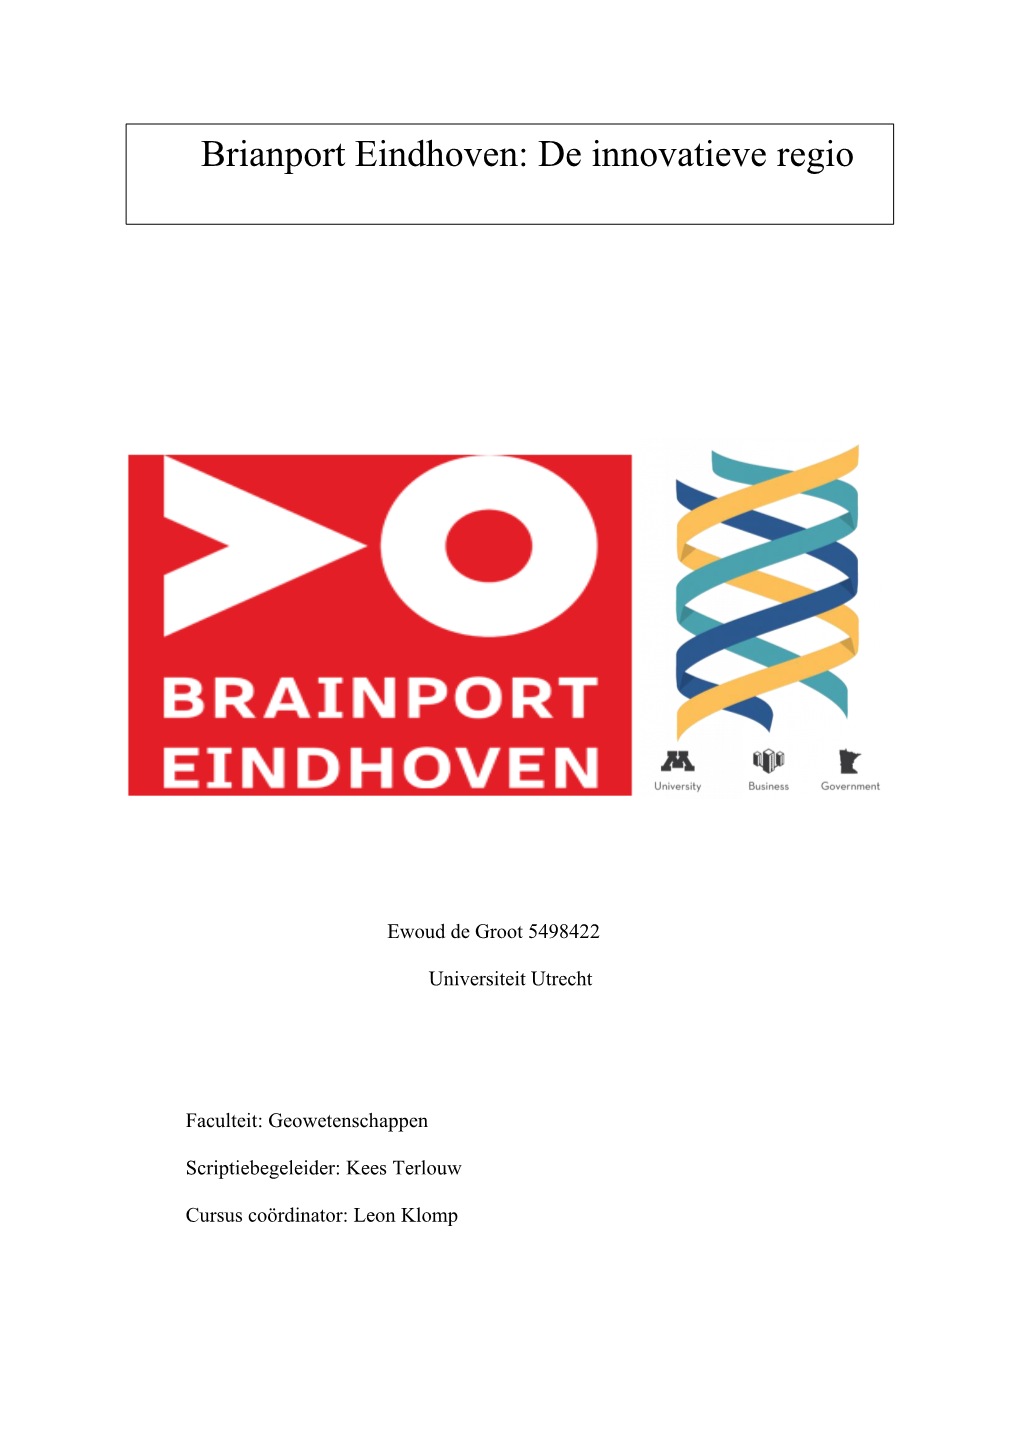 Brianport Eindhoven: De Innovatieve Regio